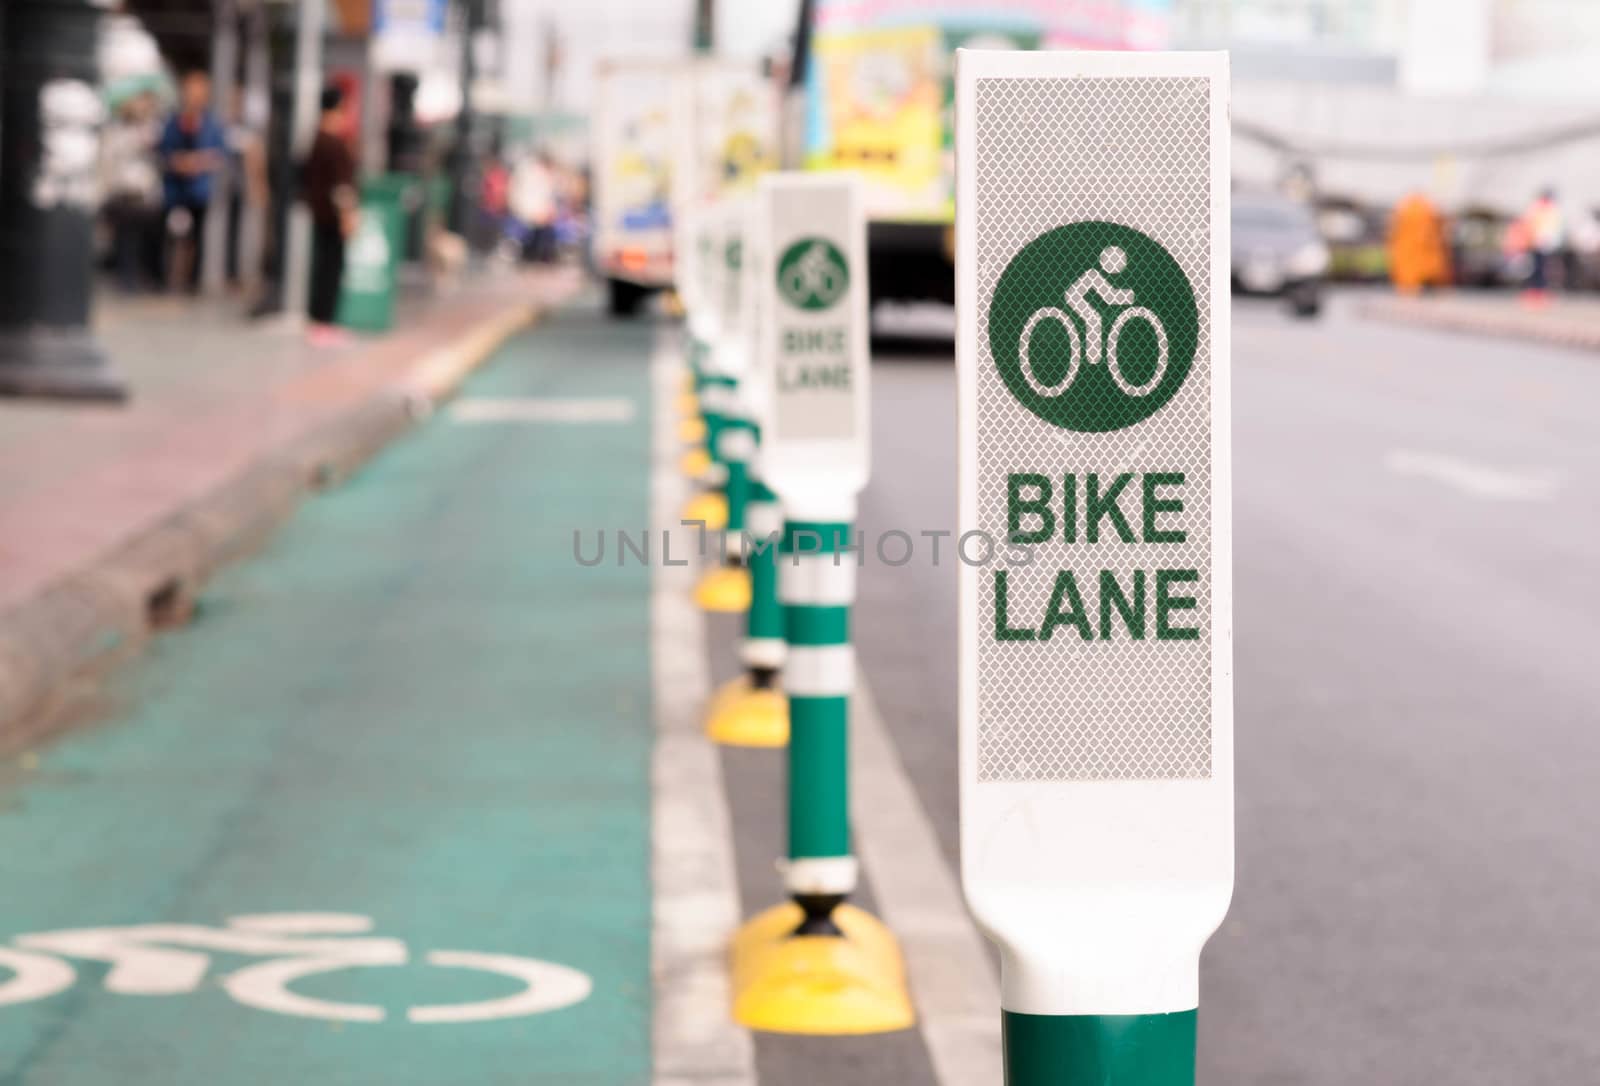 Bike lane, road for bicycles  (bike, road, sign)